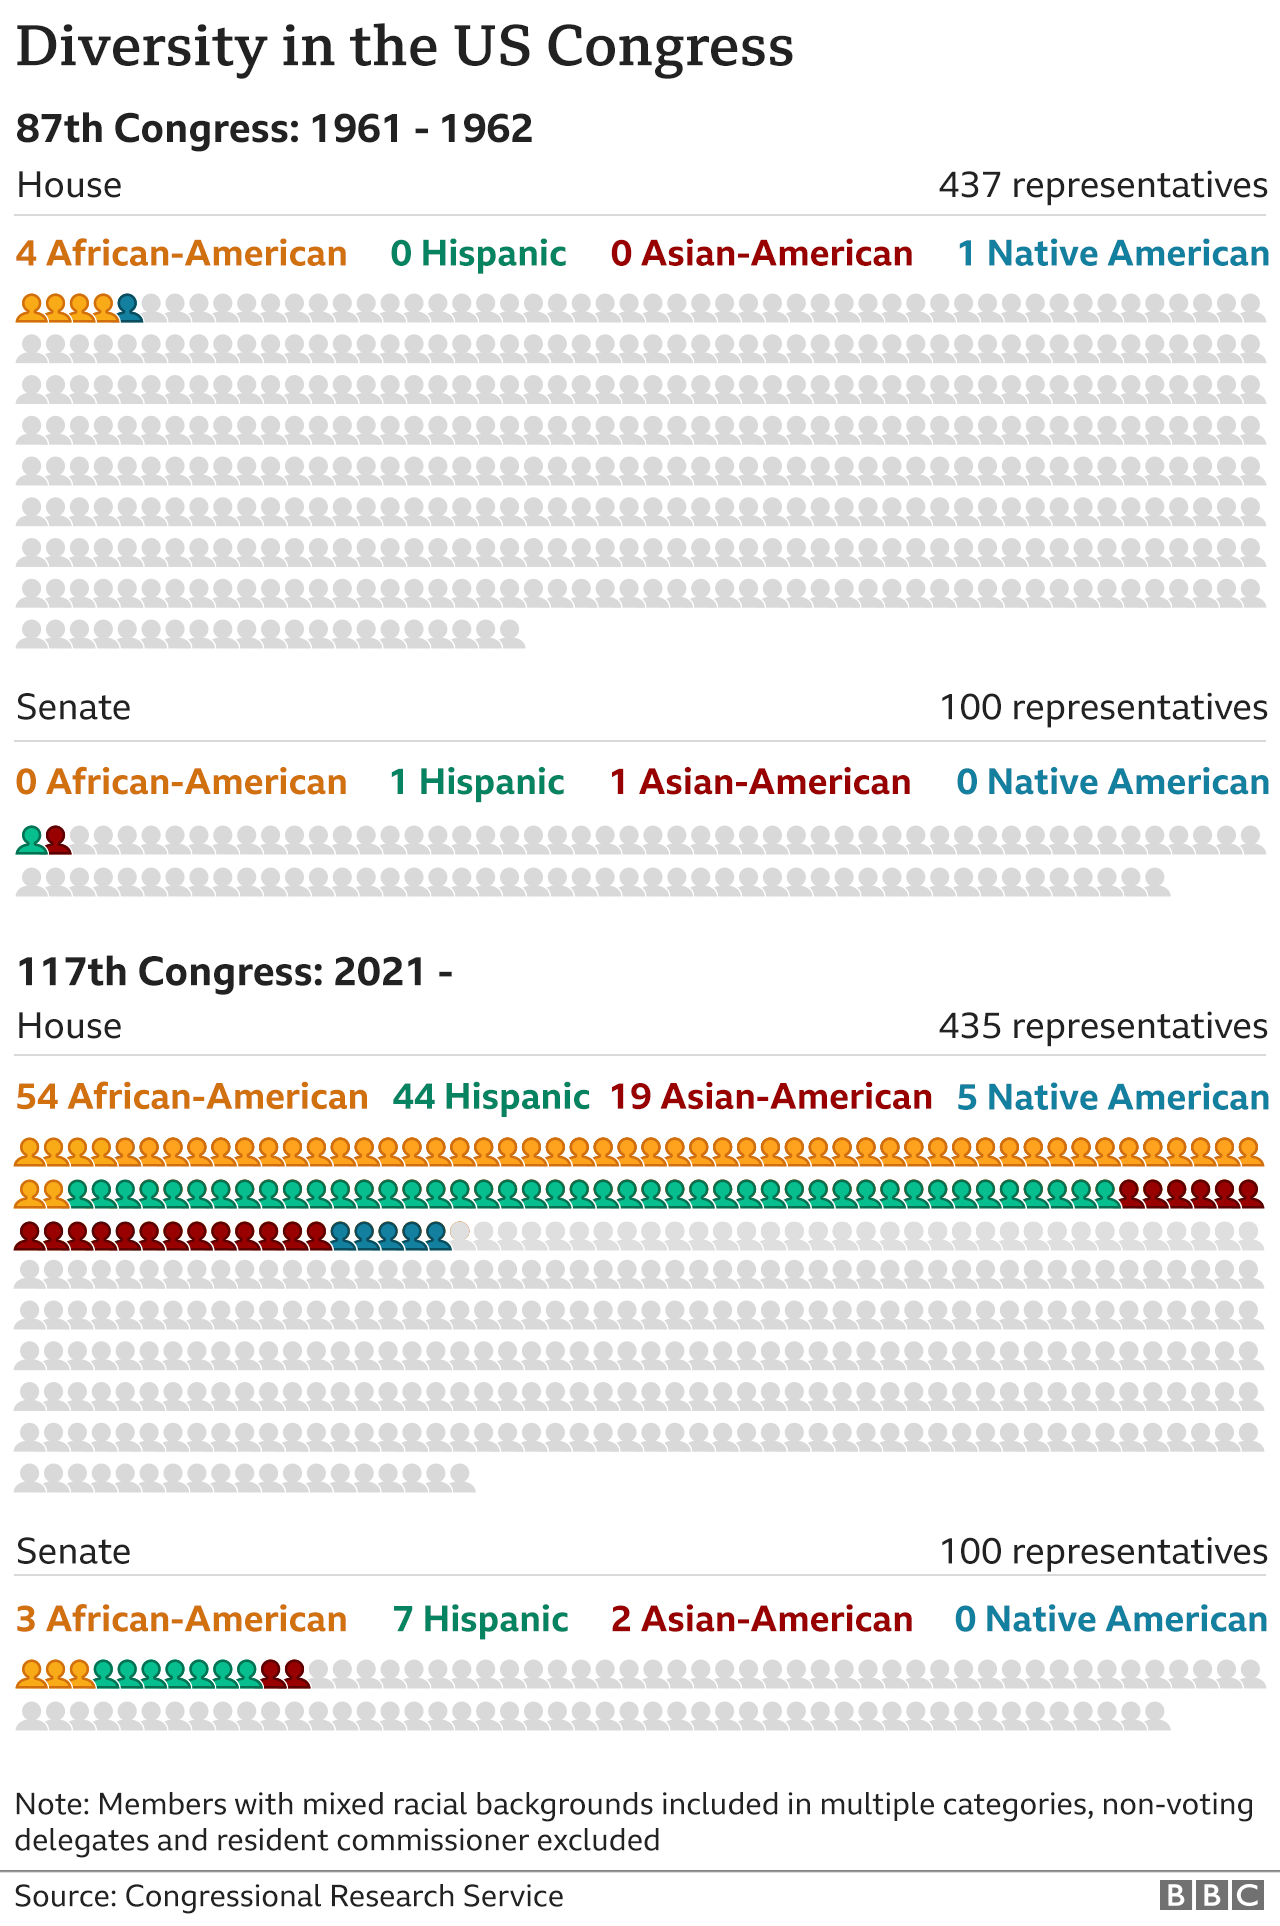 US Congress diversity